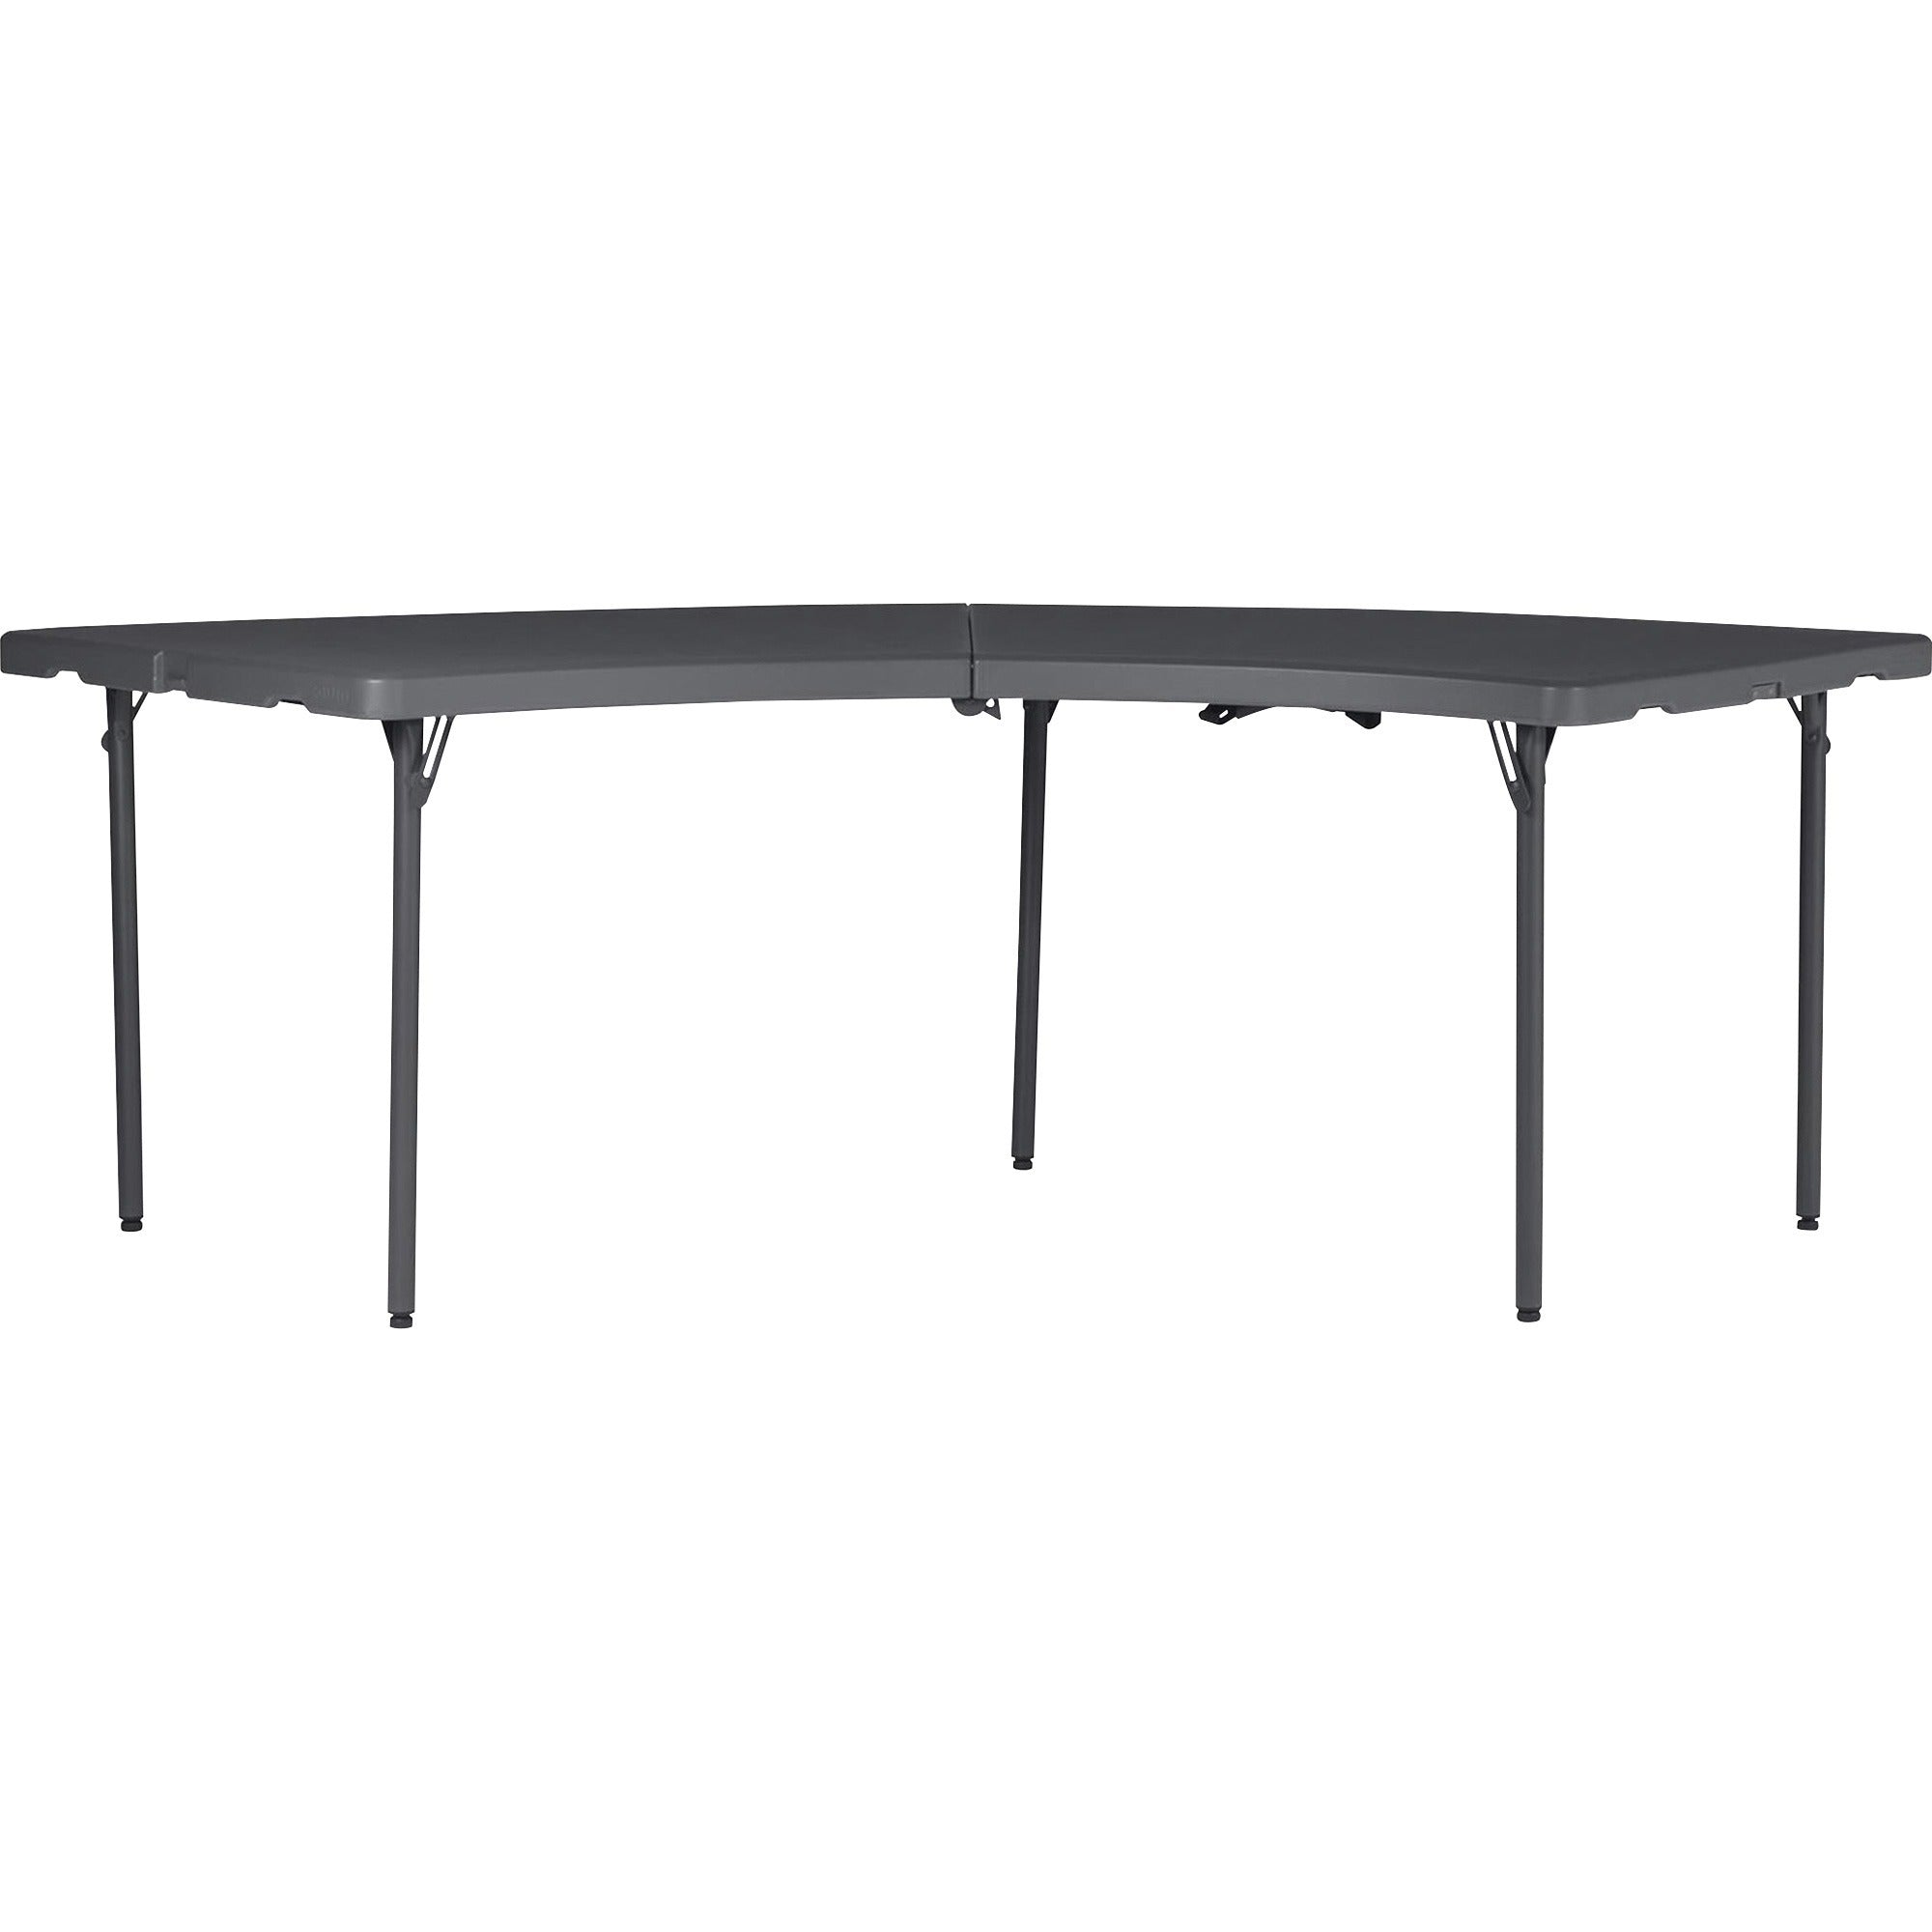 Dorel Zown Moon Commercial Blow Mold Folding Table - 5 Legs - 600 lb Capacity x 30" Table Top Width x 92.60" Table Top Depth - 29.25" Height - Gray - High-density Polyethylene (HDPE) - 1 Each - 1